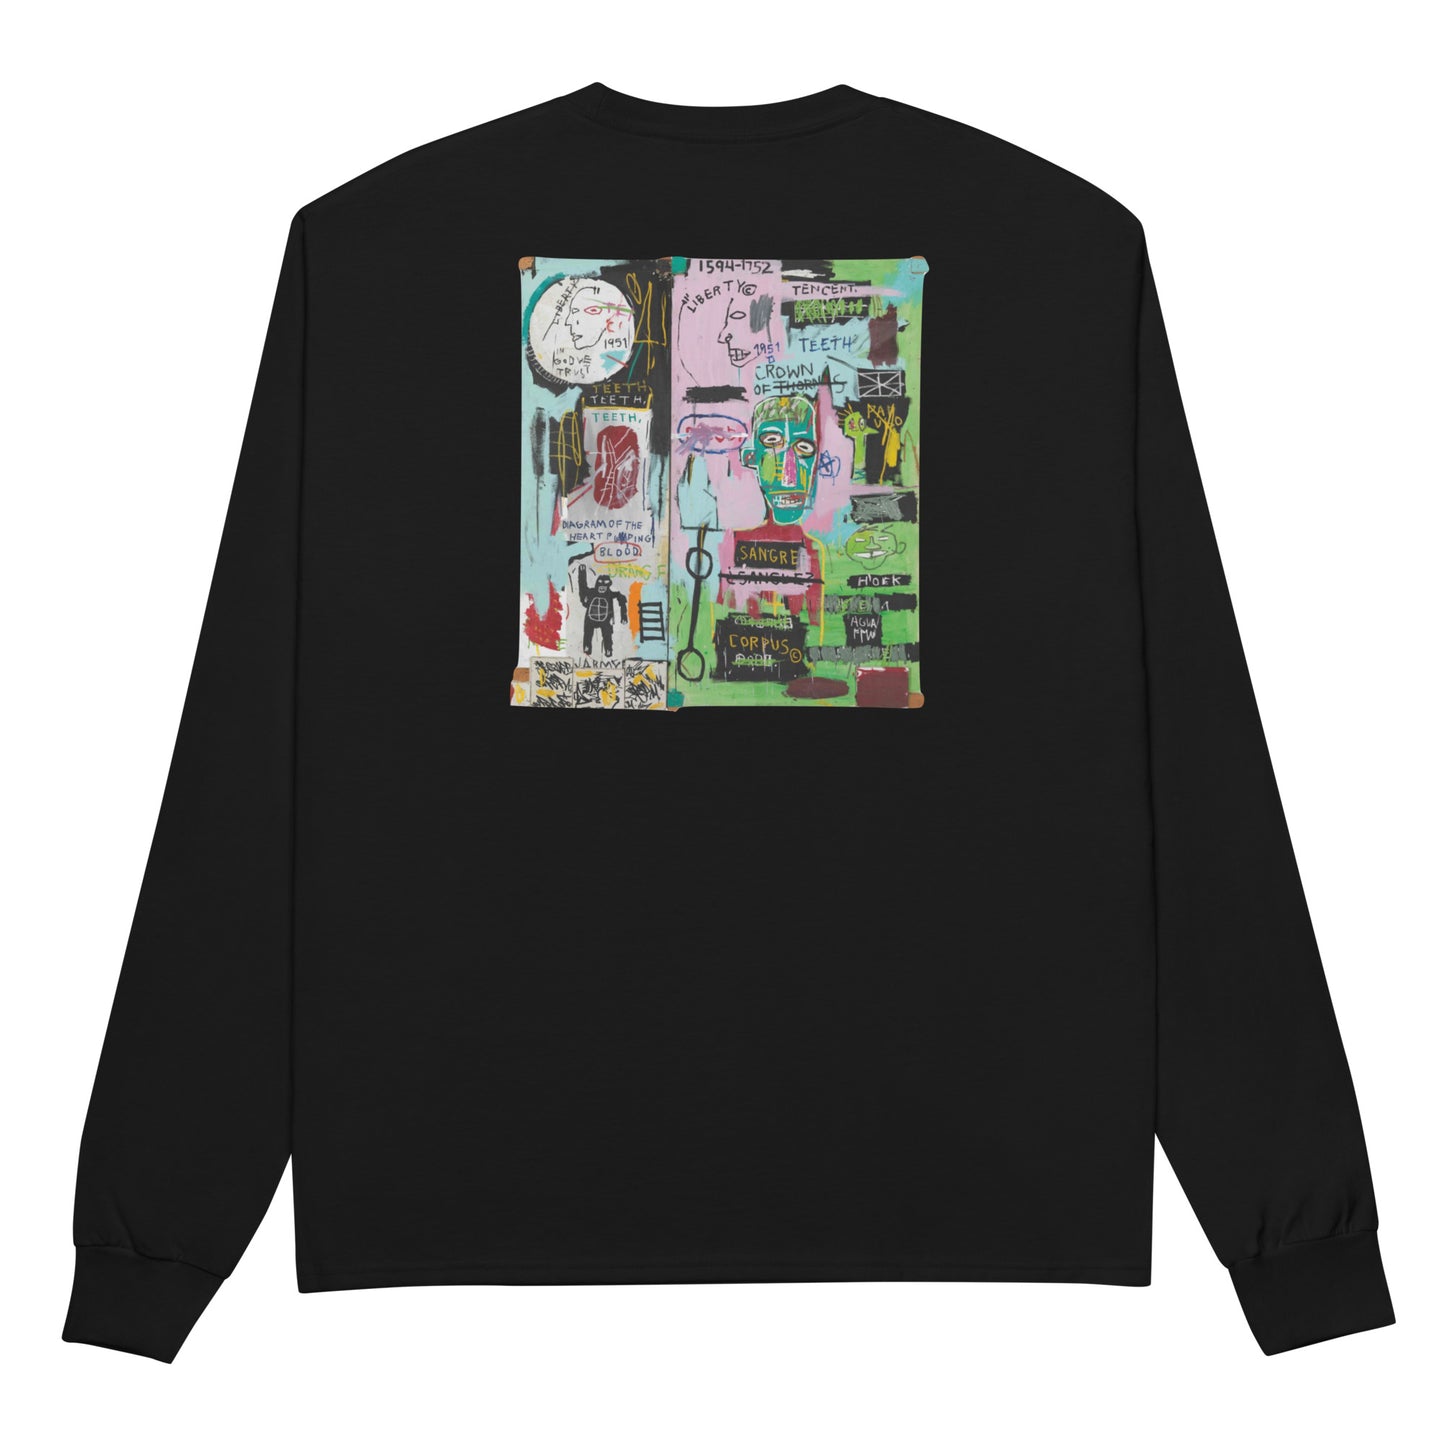 Jean-Michel Basquiat "In Italian" Artwork Embroidered + Printed Premium Champion Streetwear Long Sleeve Shirt Black